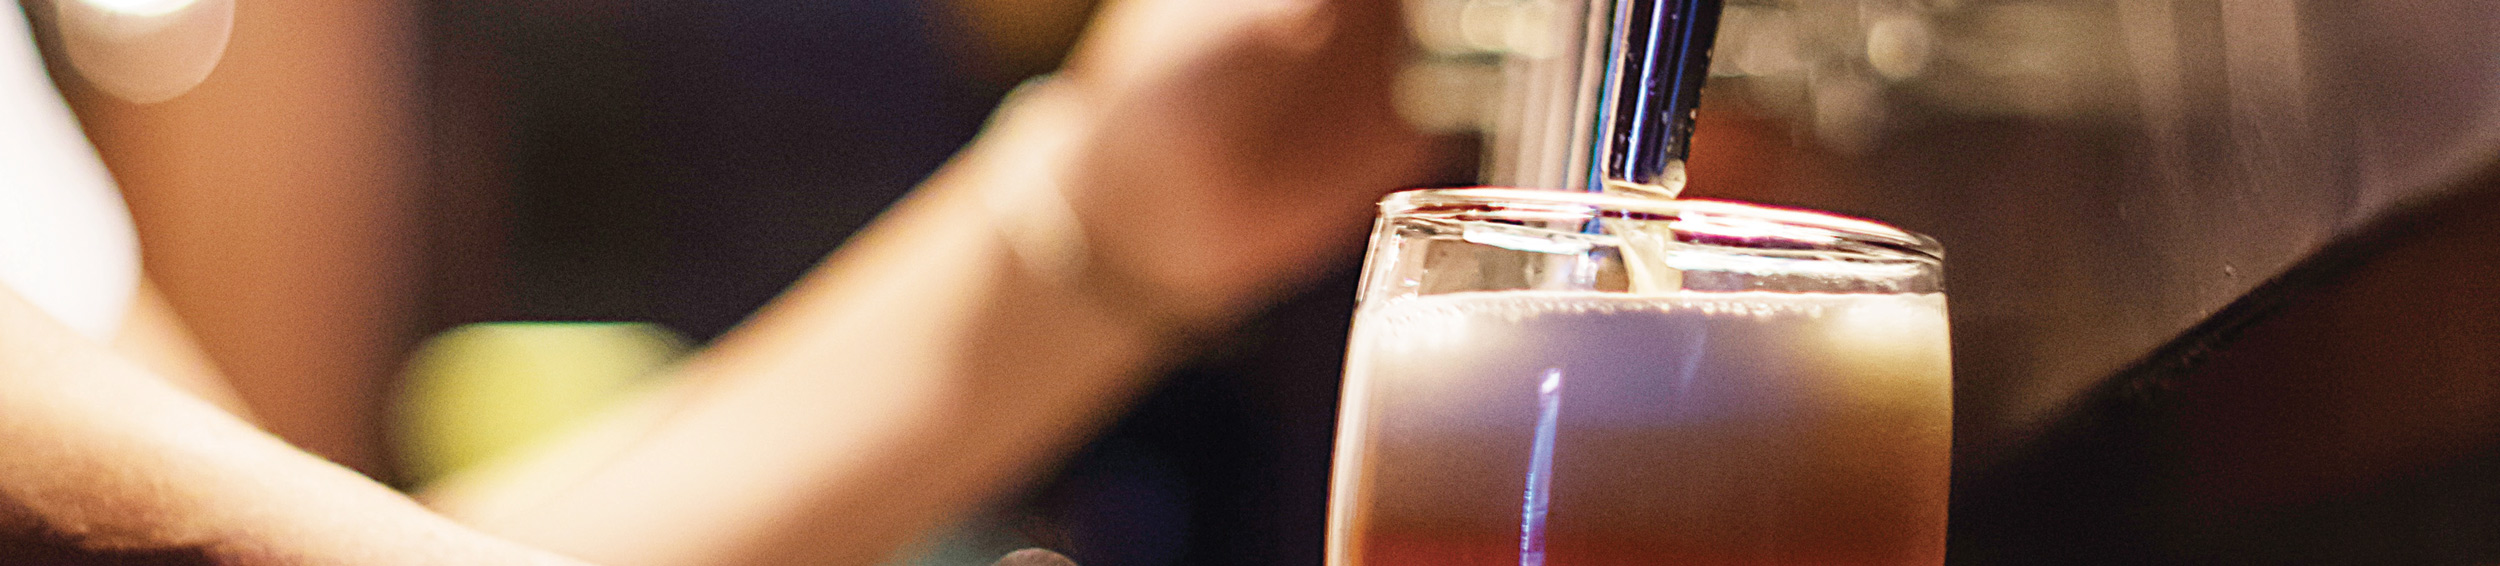 Hopera Lupulus Belgian Ale | Birra alla spina e impianti